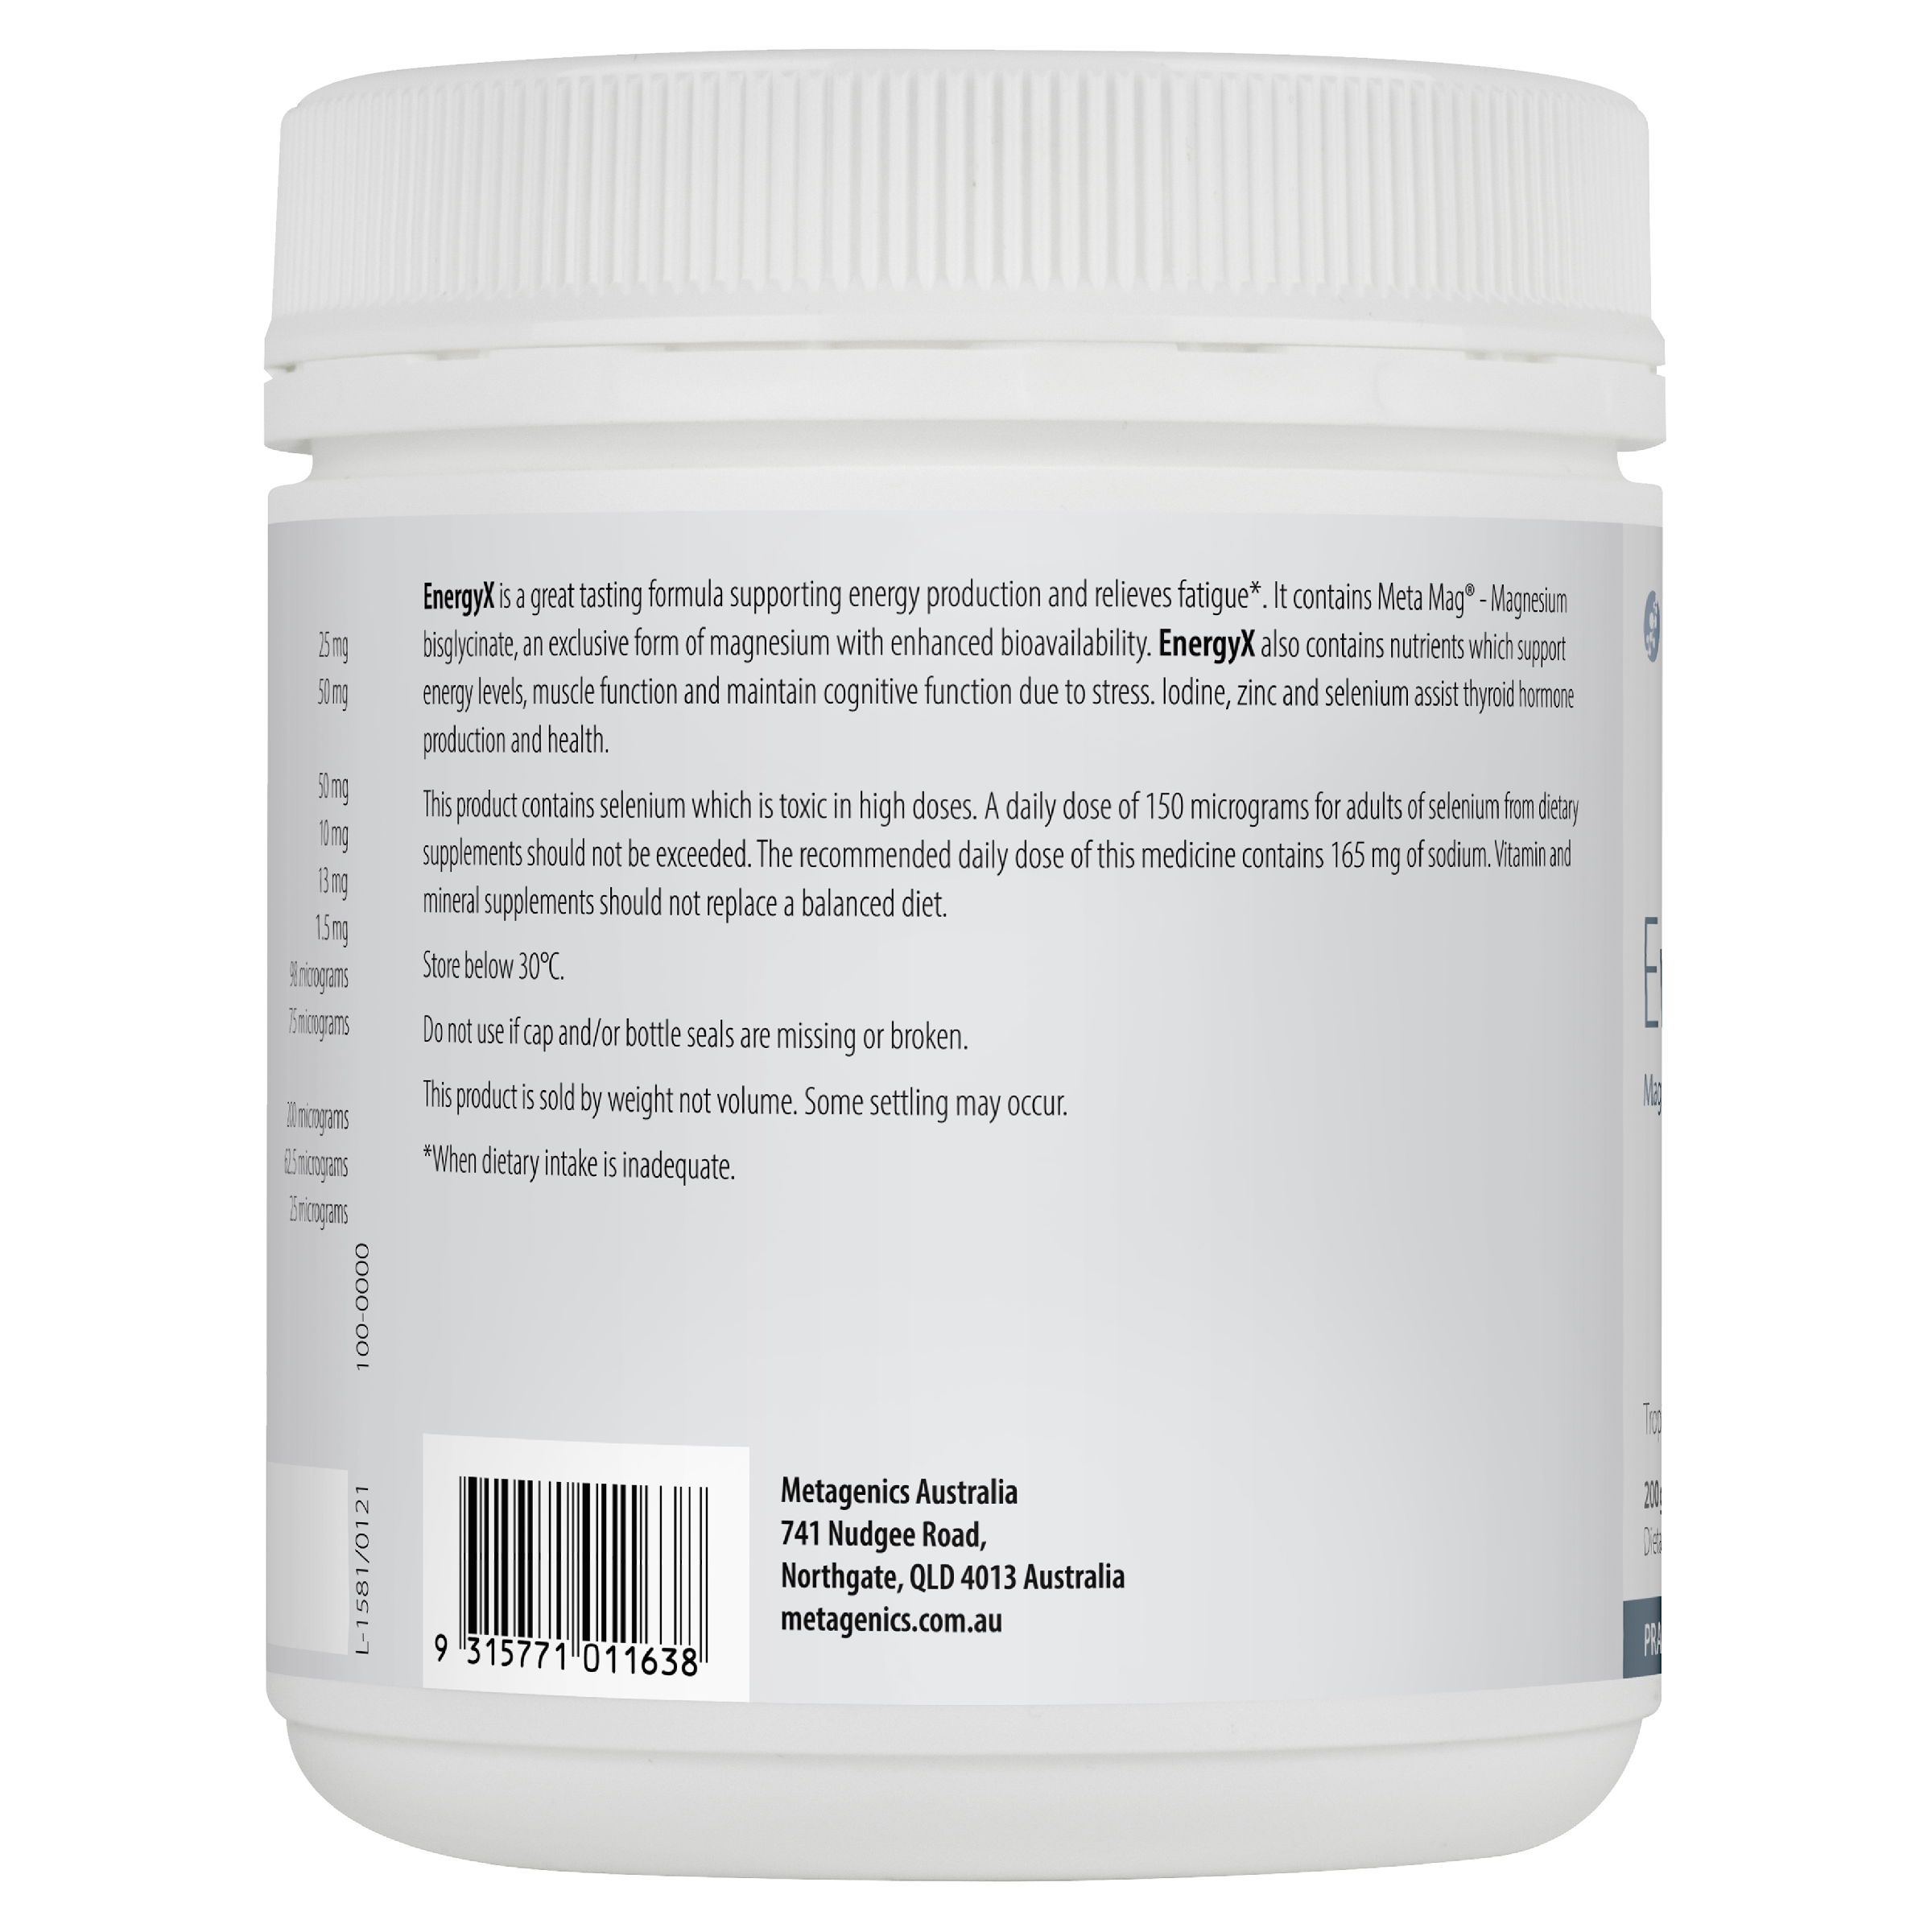 Metagenics EnergyX Oral Powder Tropical Flavour 200 g